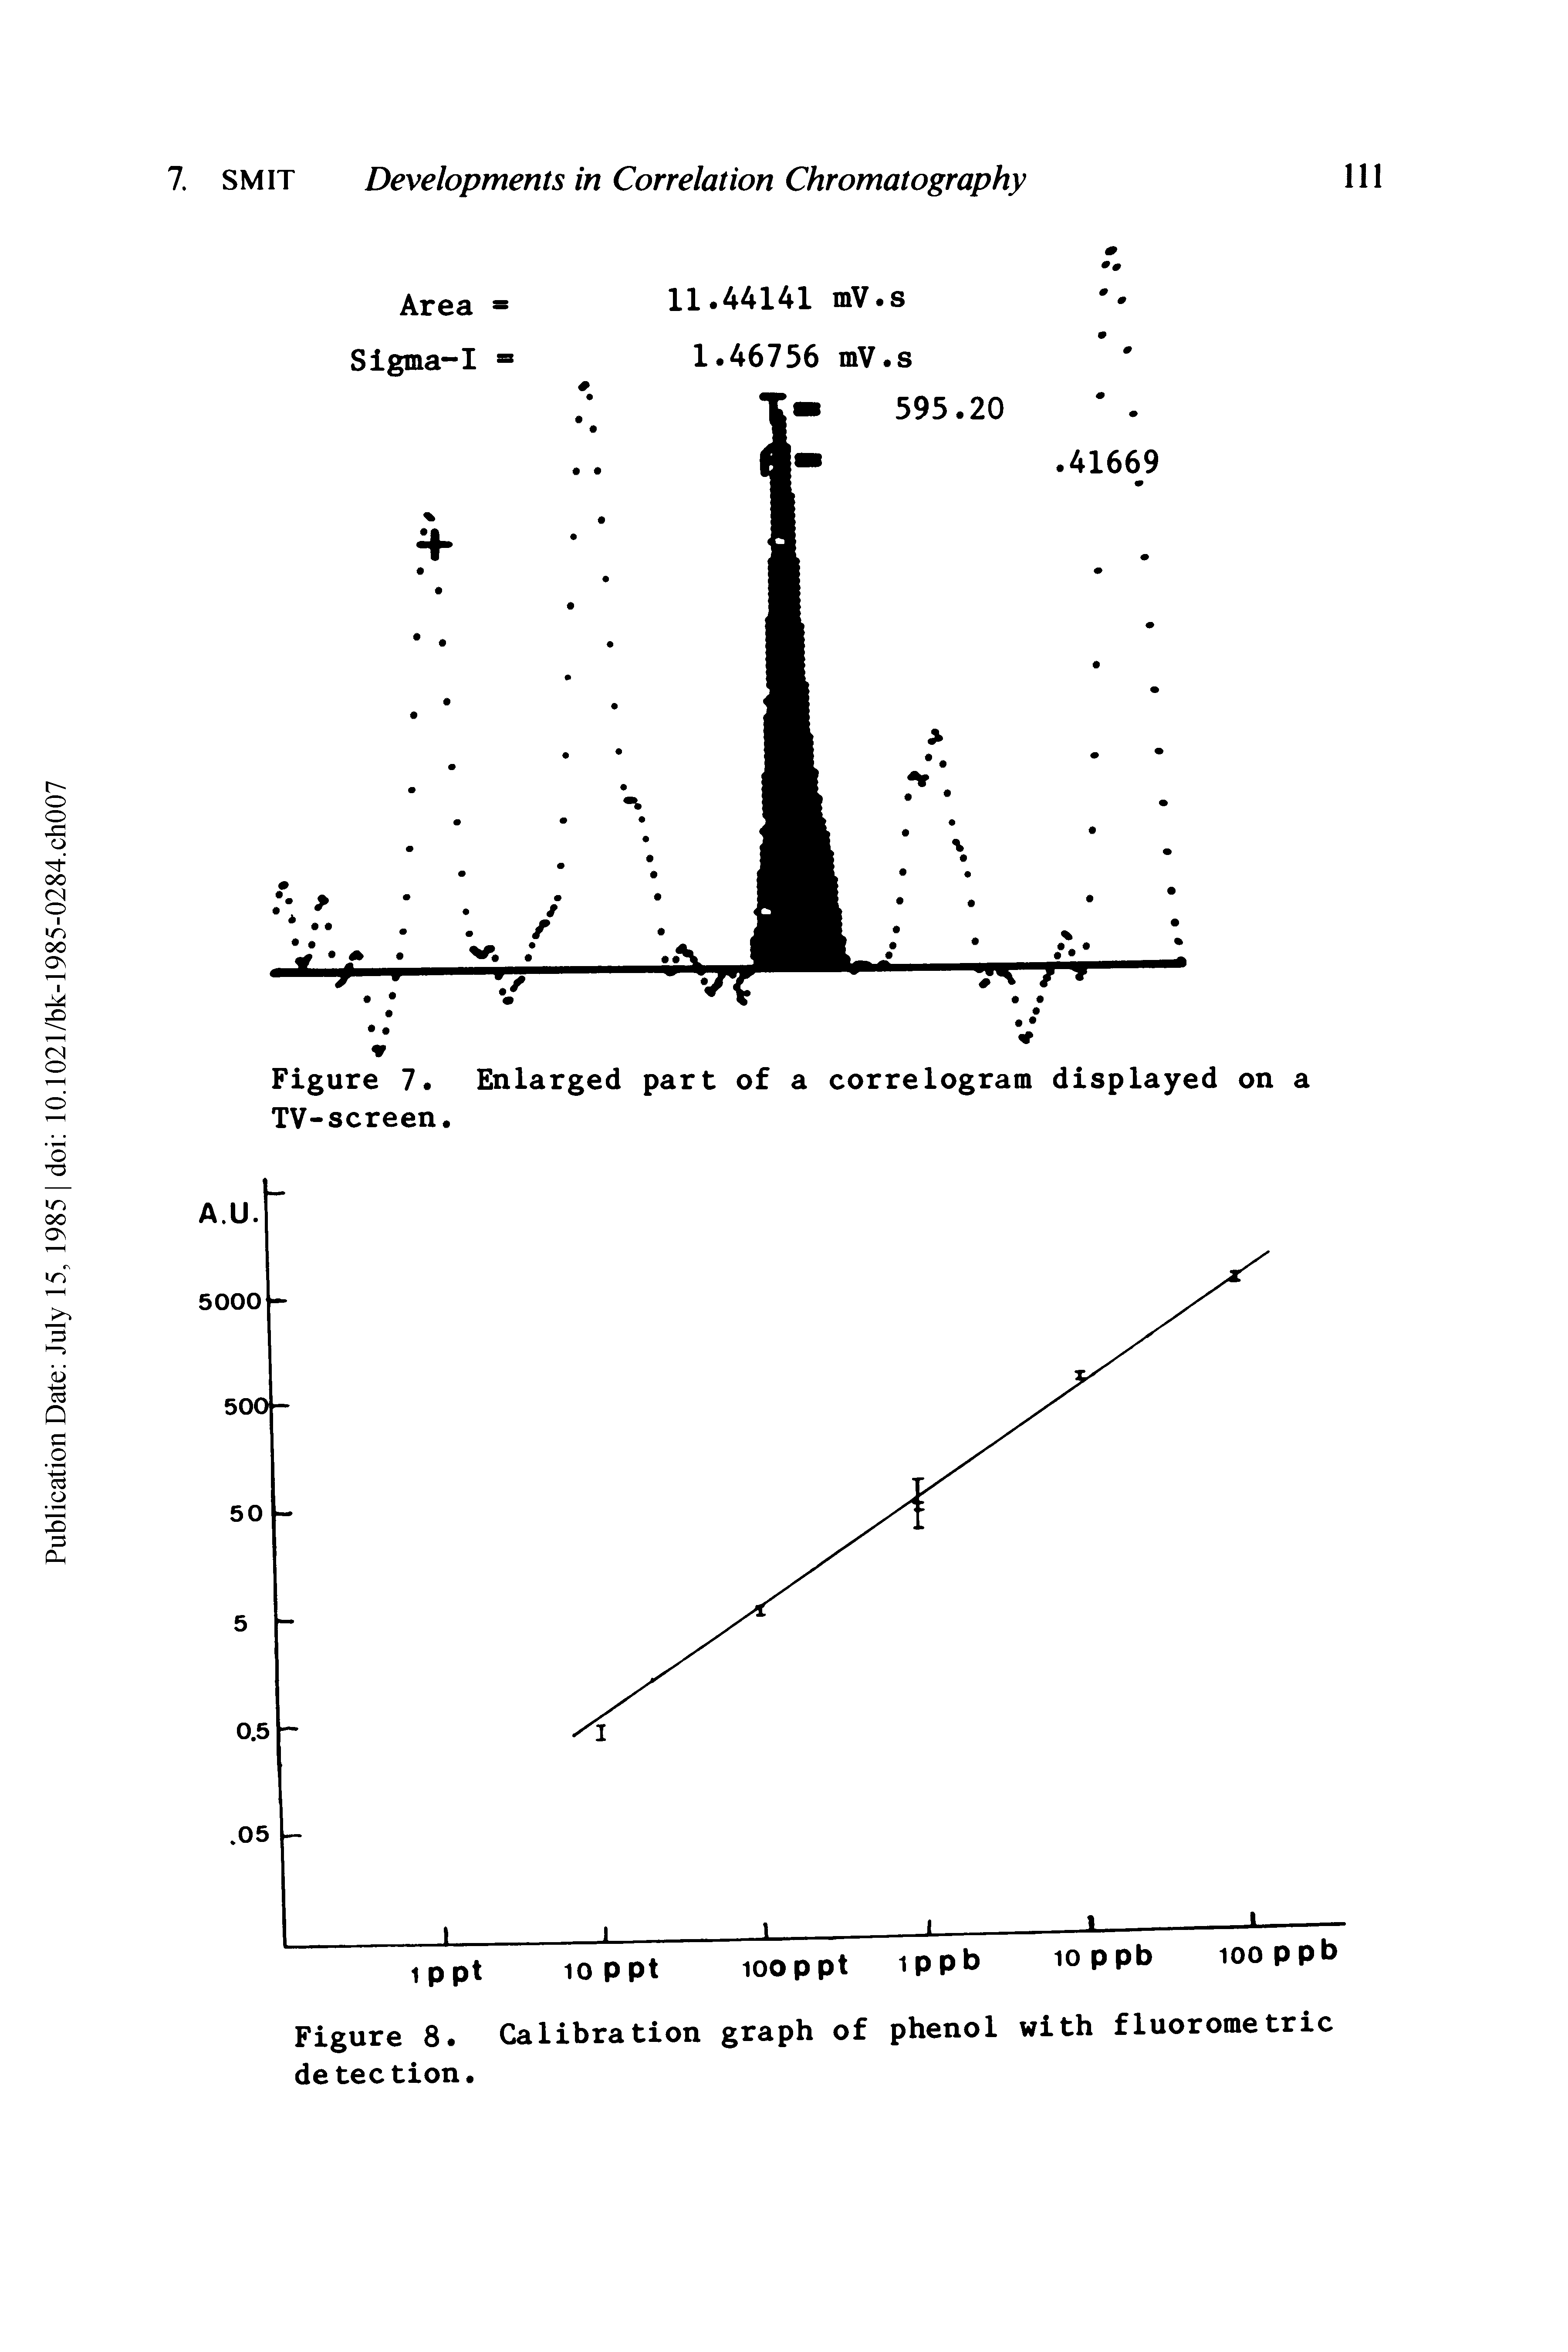 Figure 8. Calibration graph of phenol with fluorometric detection.